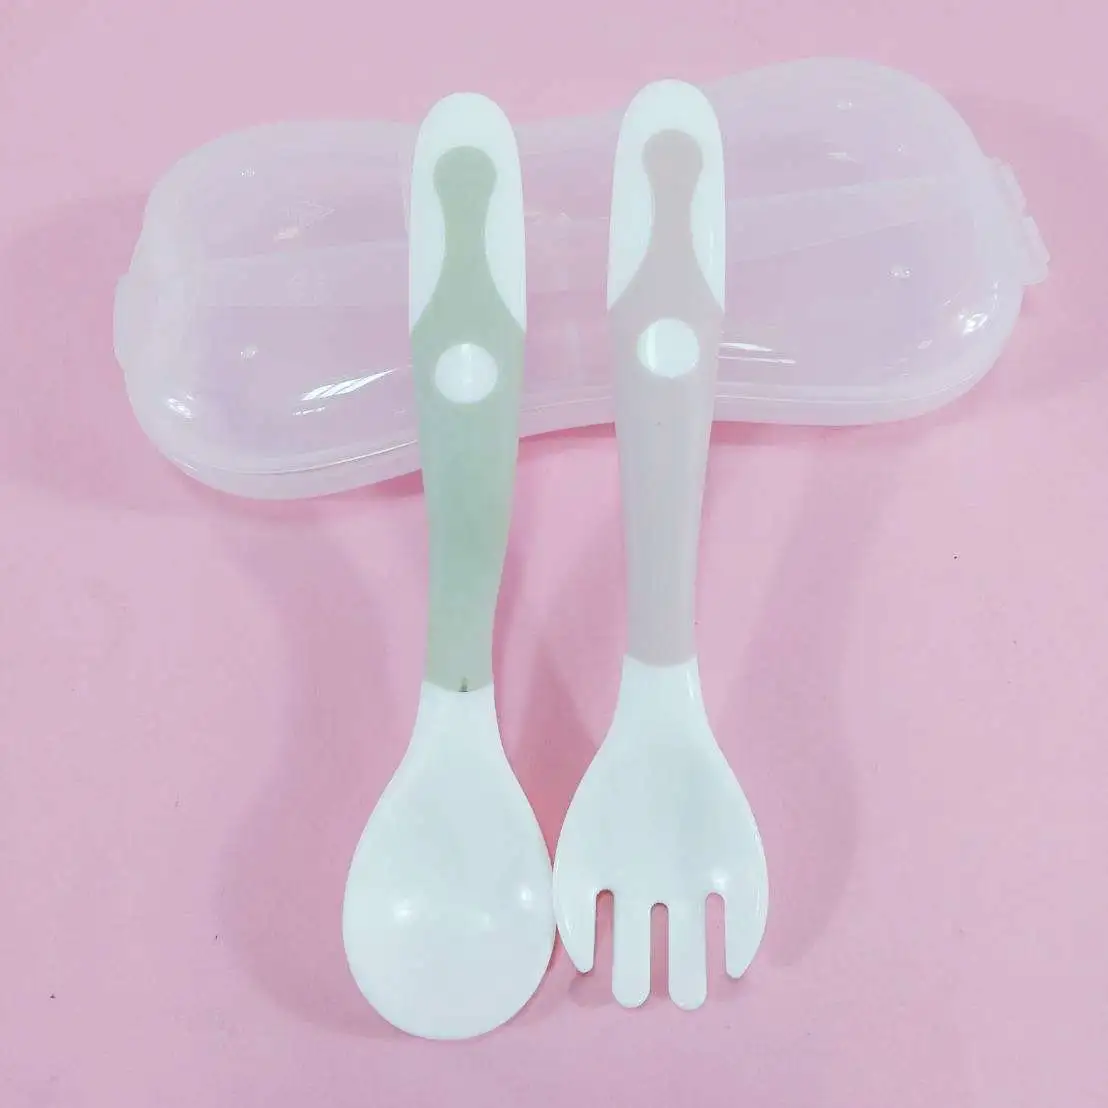 AAG (เอเอจี) Baby Cutlery Soft Silicone Training Set ชุดช้อนส้อมซิลิโคนฝึกทานอาหารสำหรับเด็ก